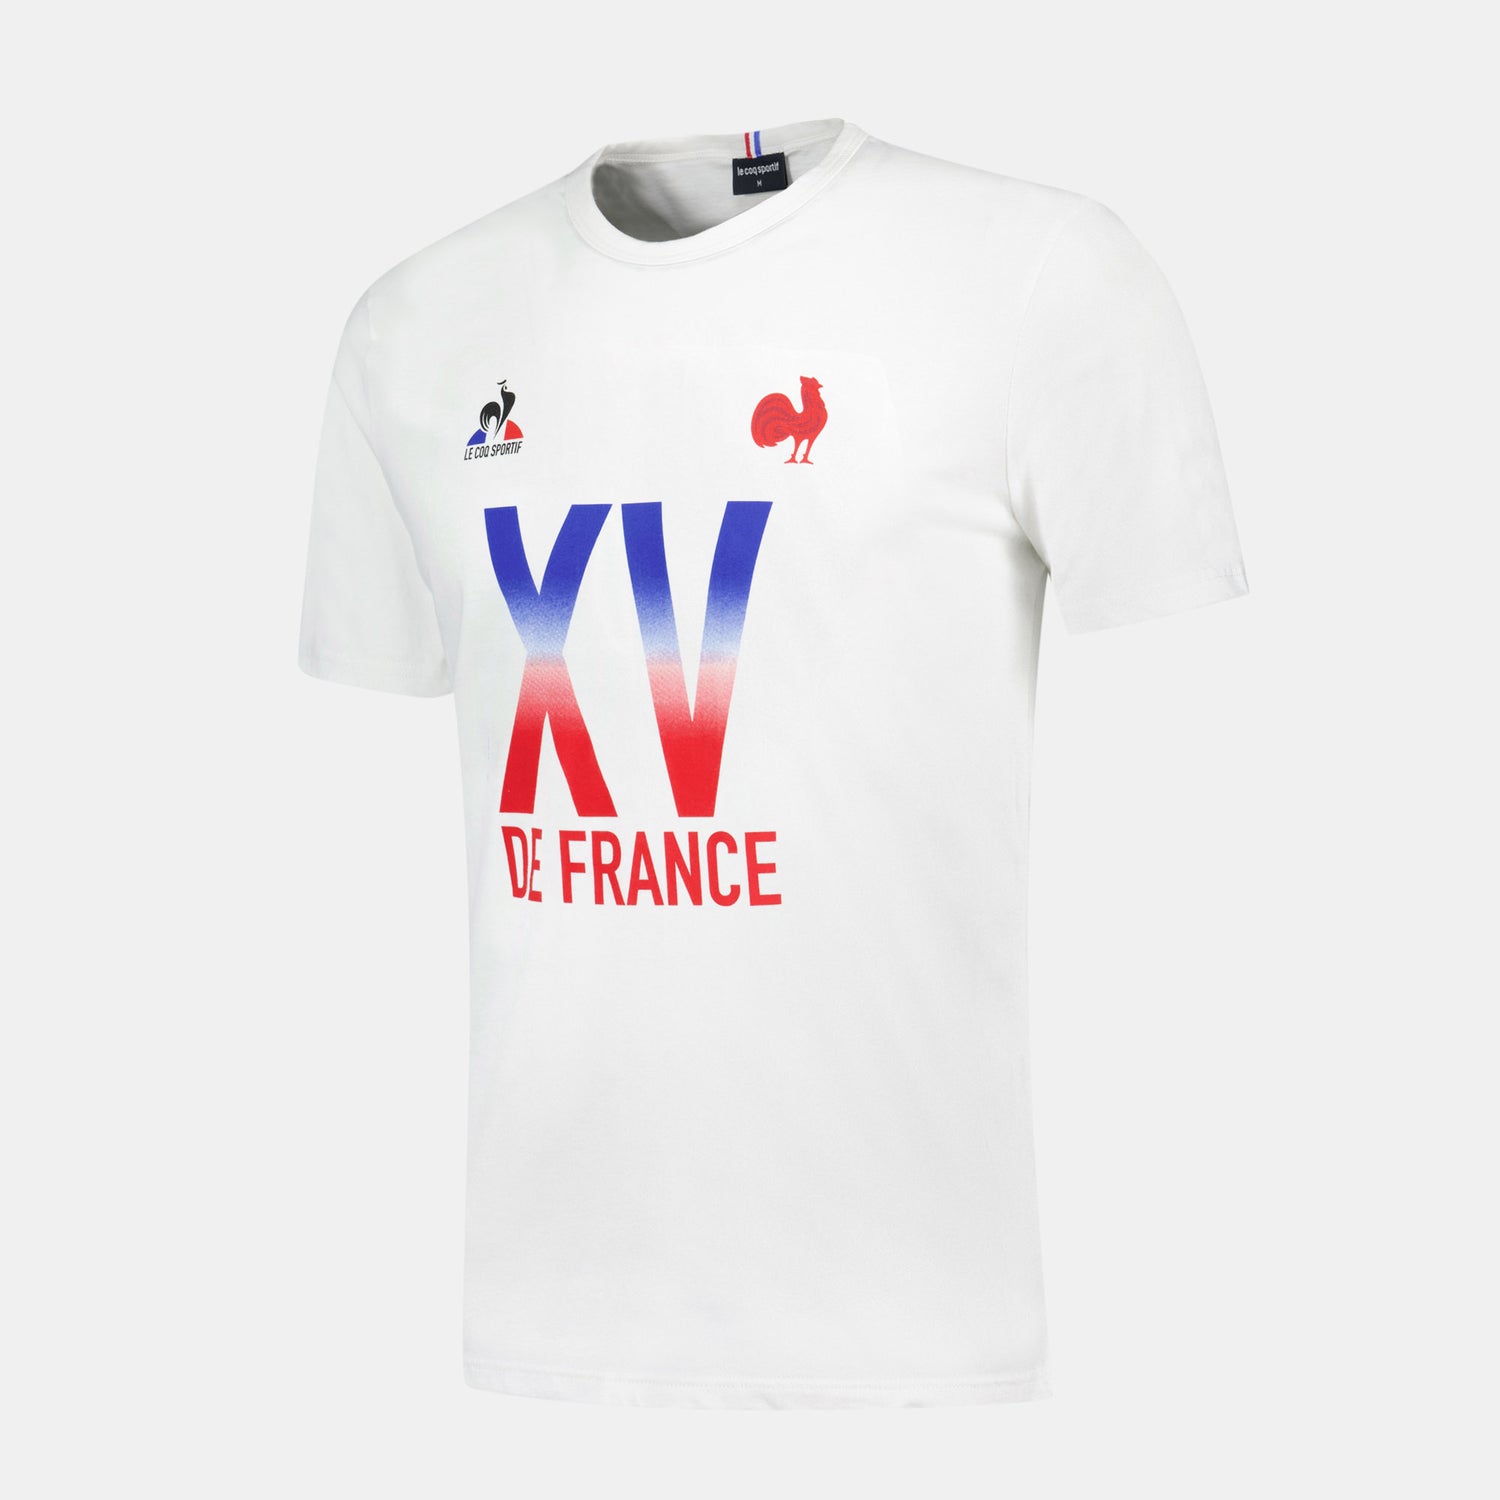 2320109-FFR FANWEAR Tee SS N°2 M new optical whi  | T-Shirt for men XV de France